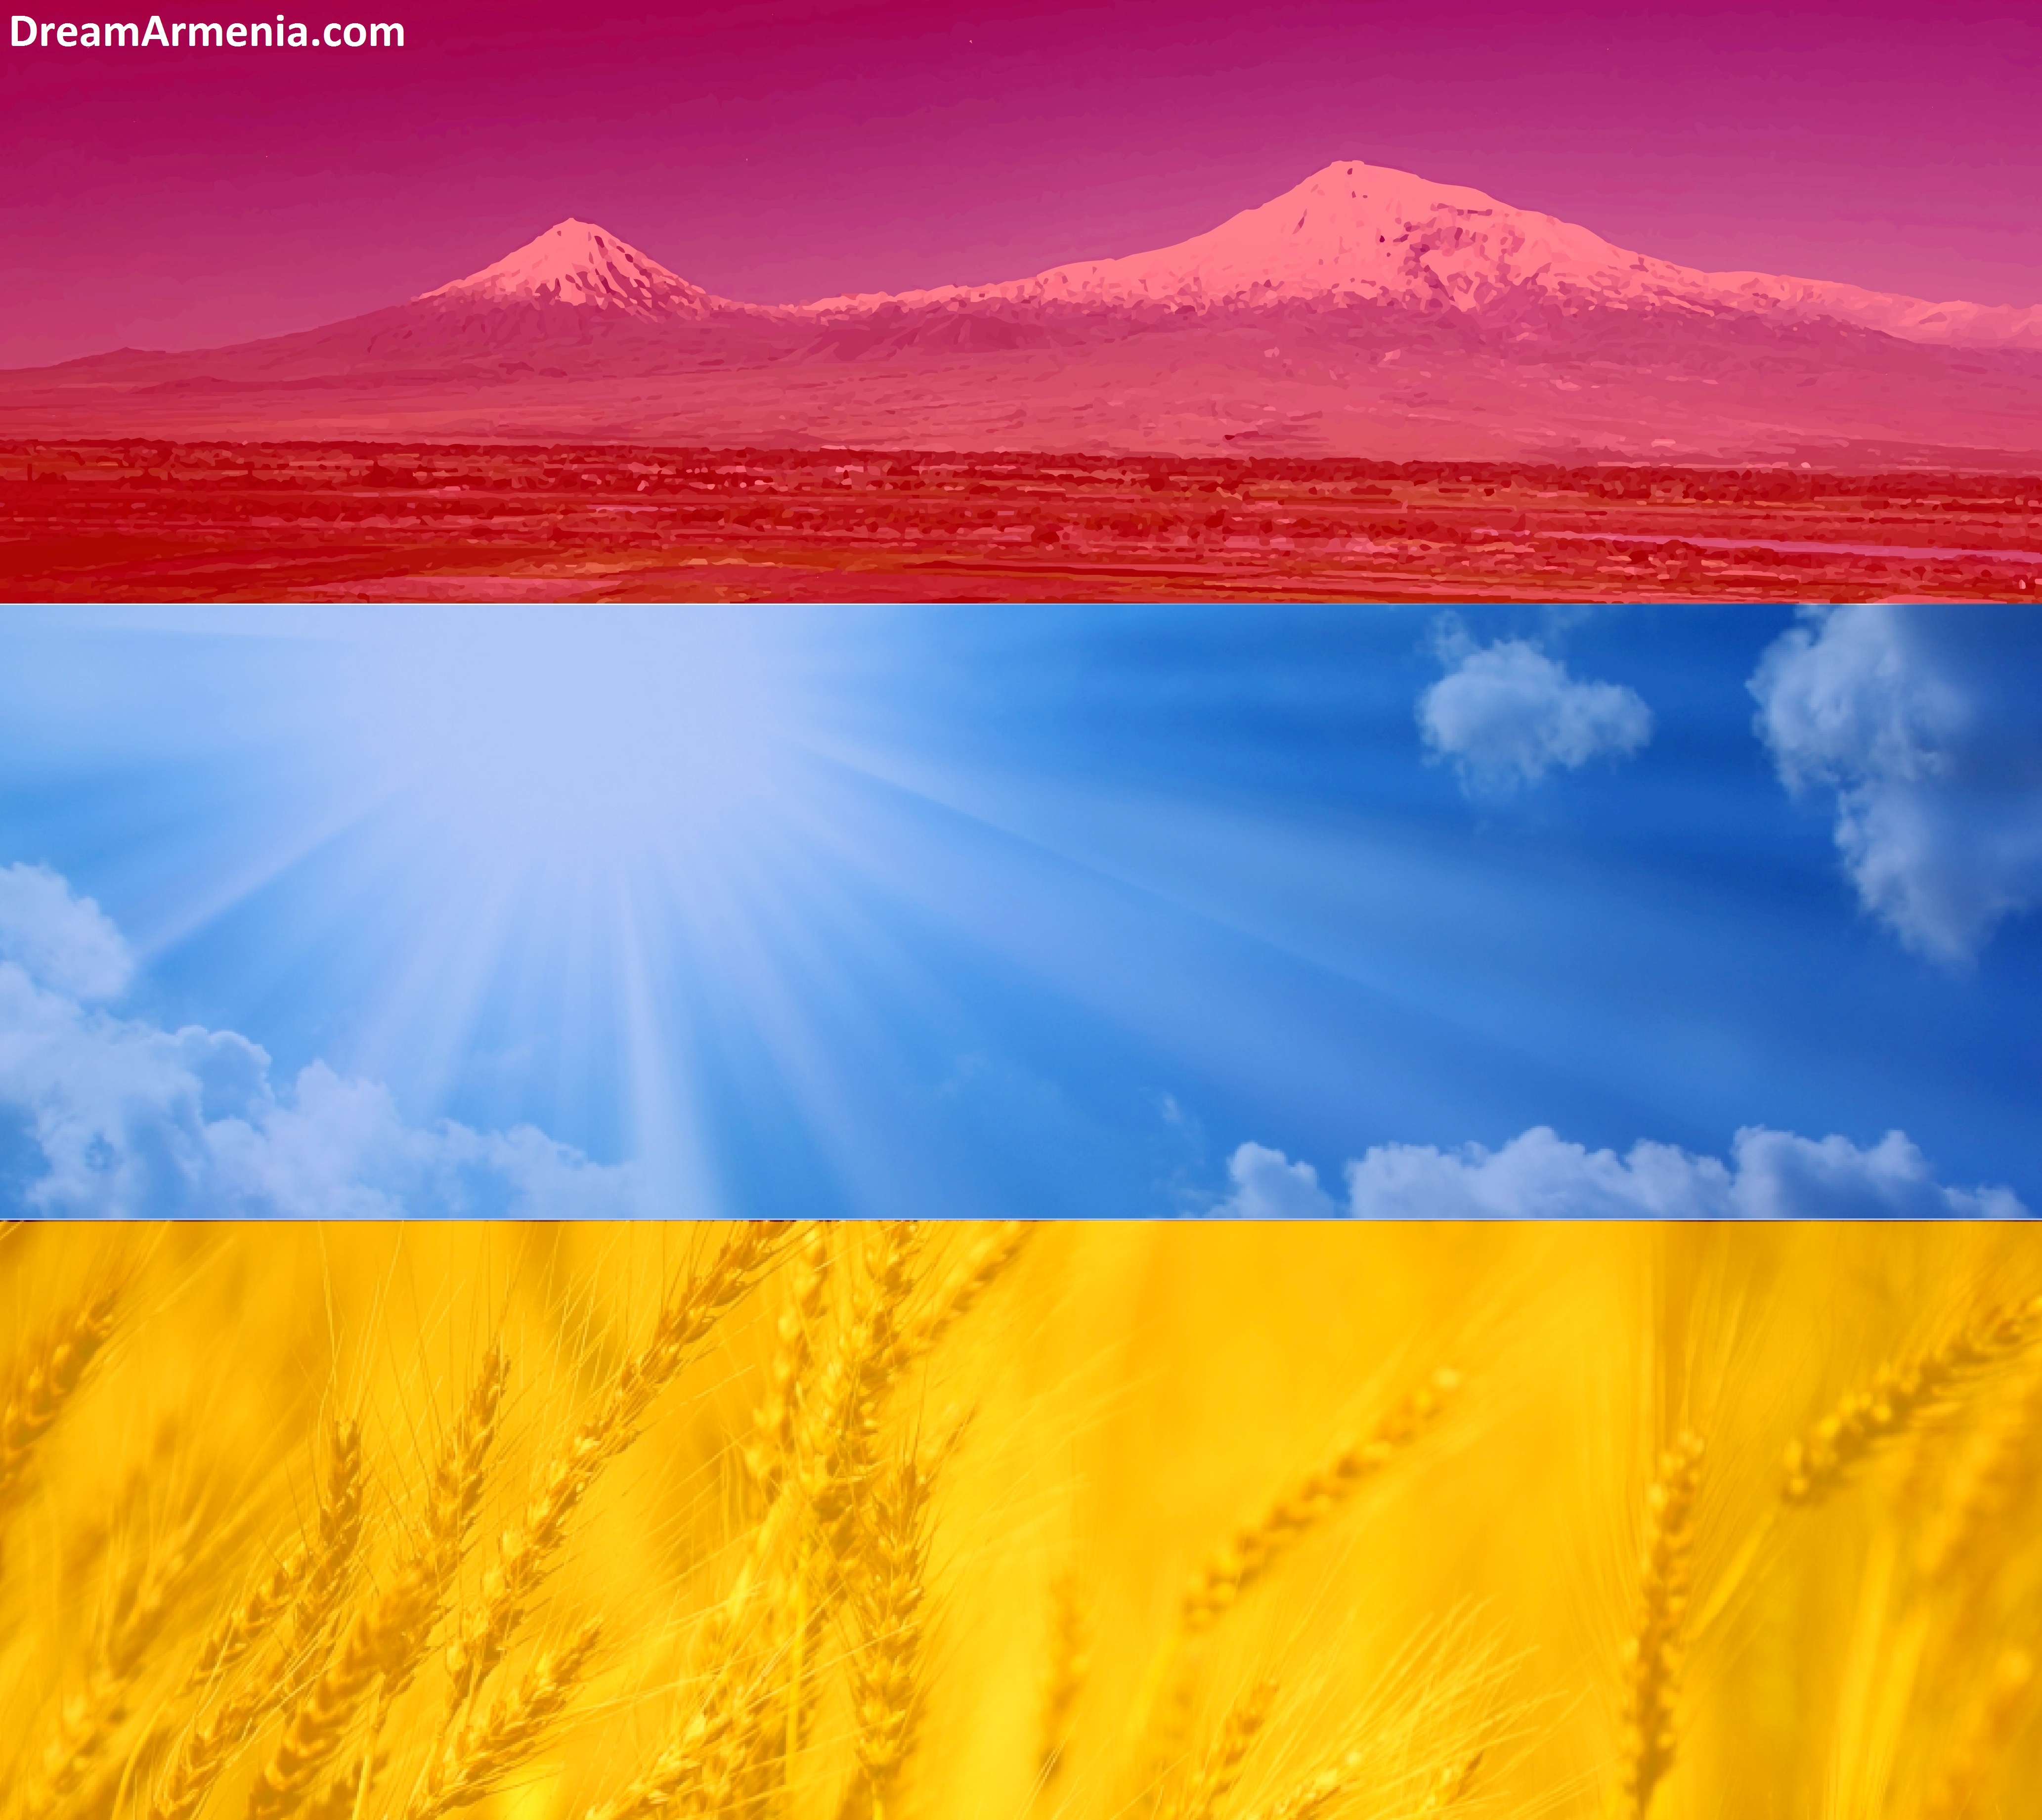 Dream Armenia